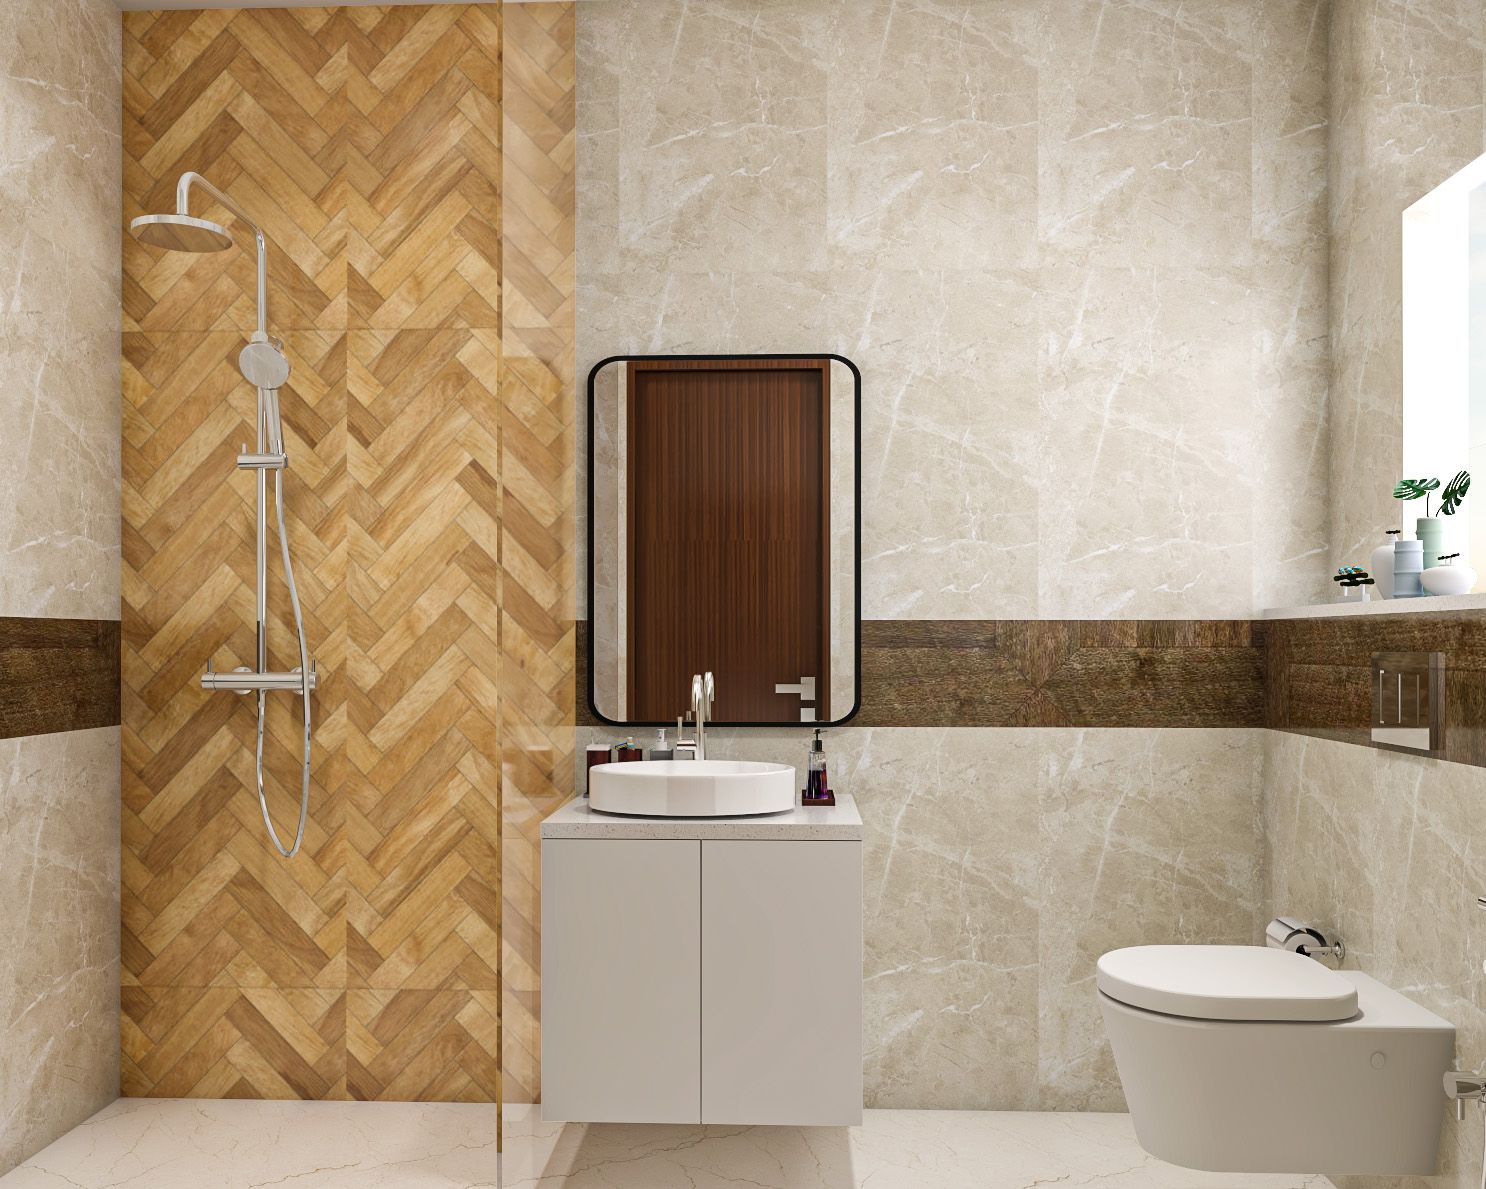 Modern Ceramic And Wood Bathroom Tile Design